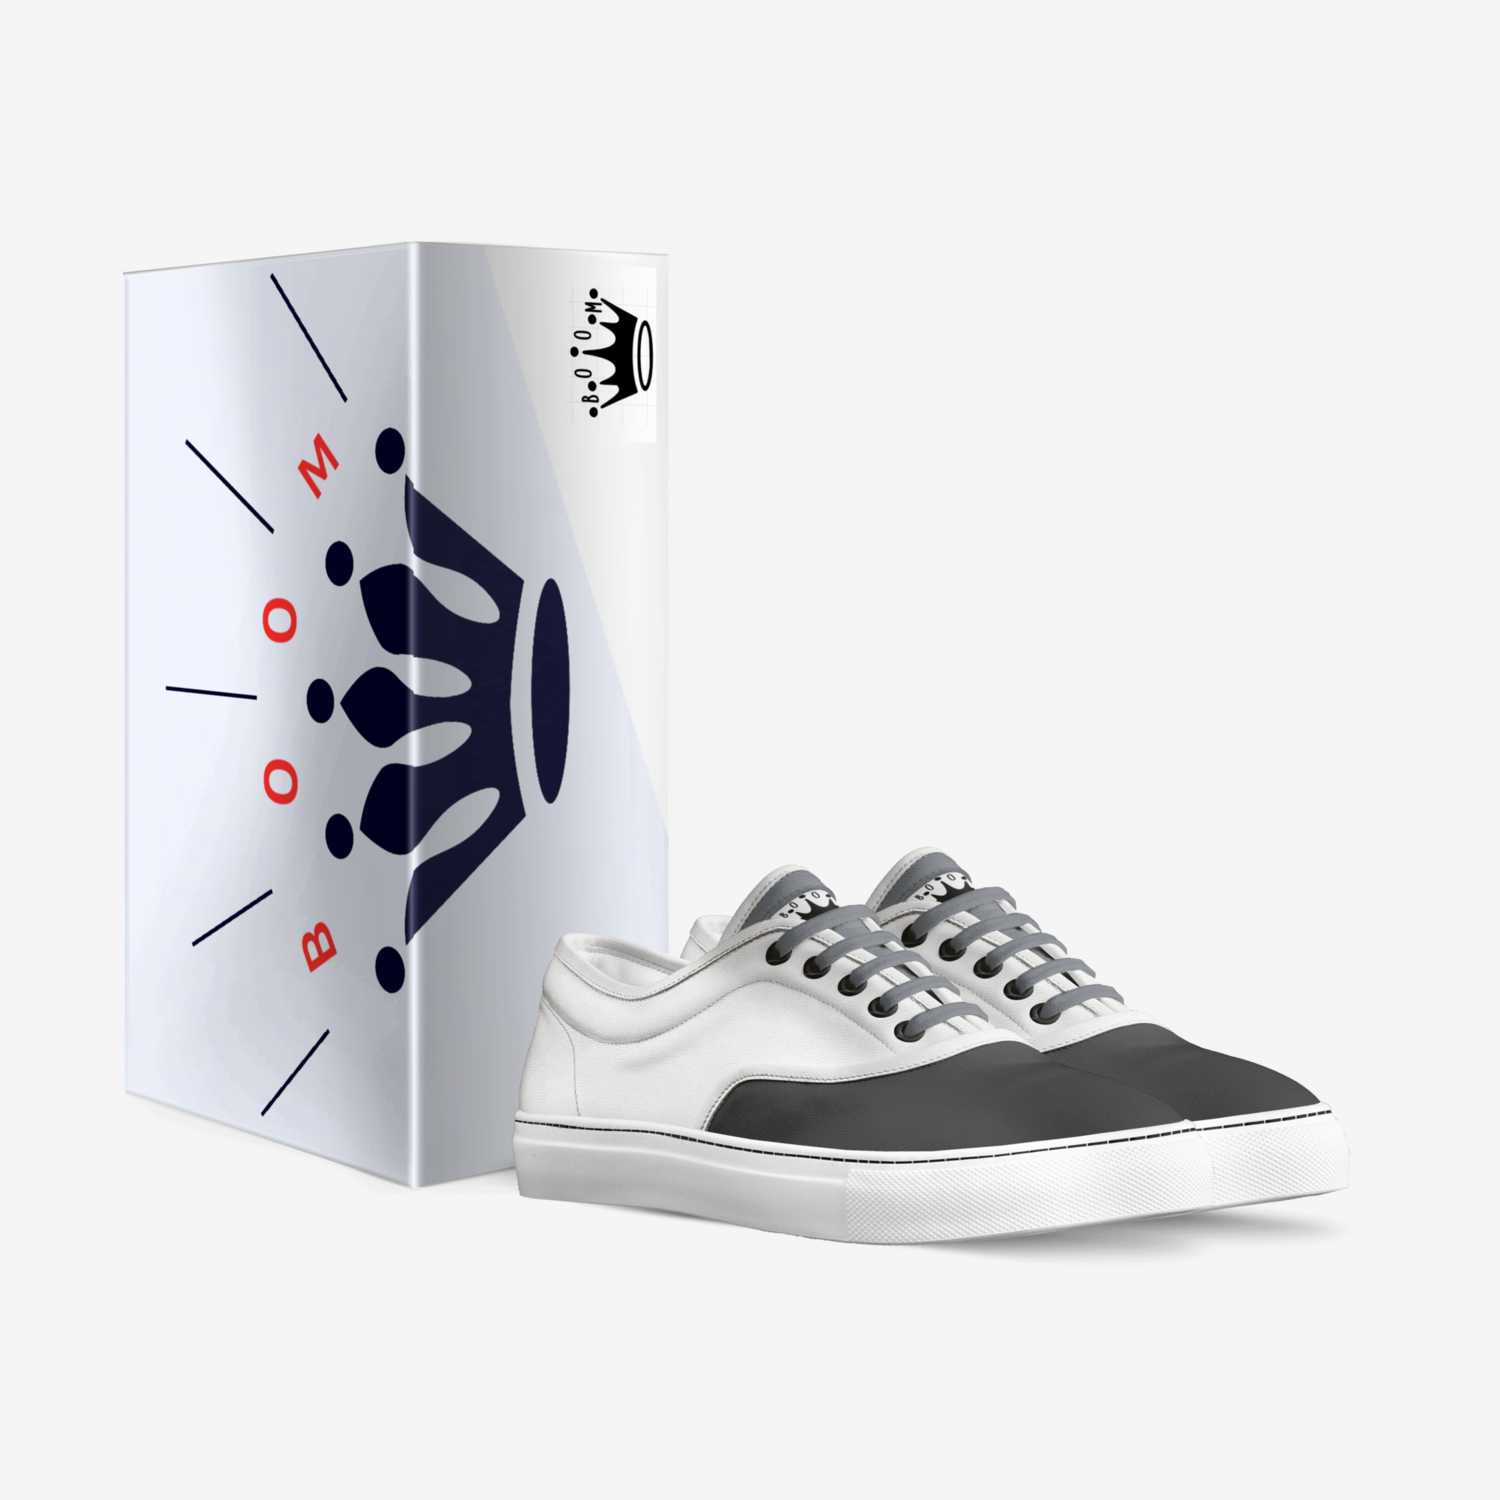 B00M footwear  custom made in Italy shoes by Adam Hogaboom | Box view